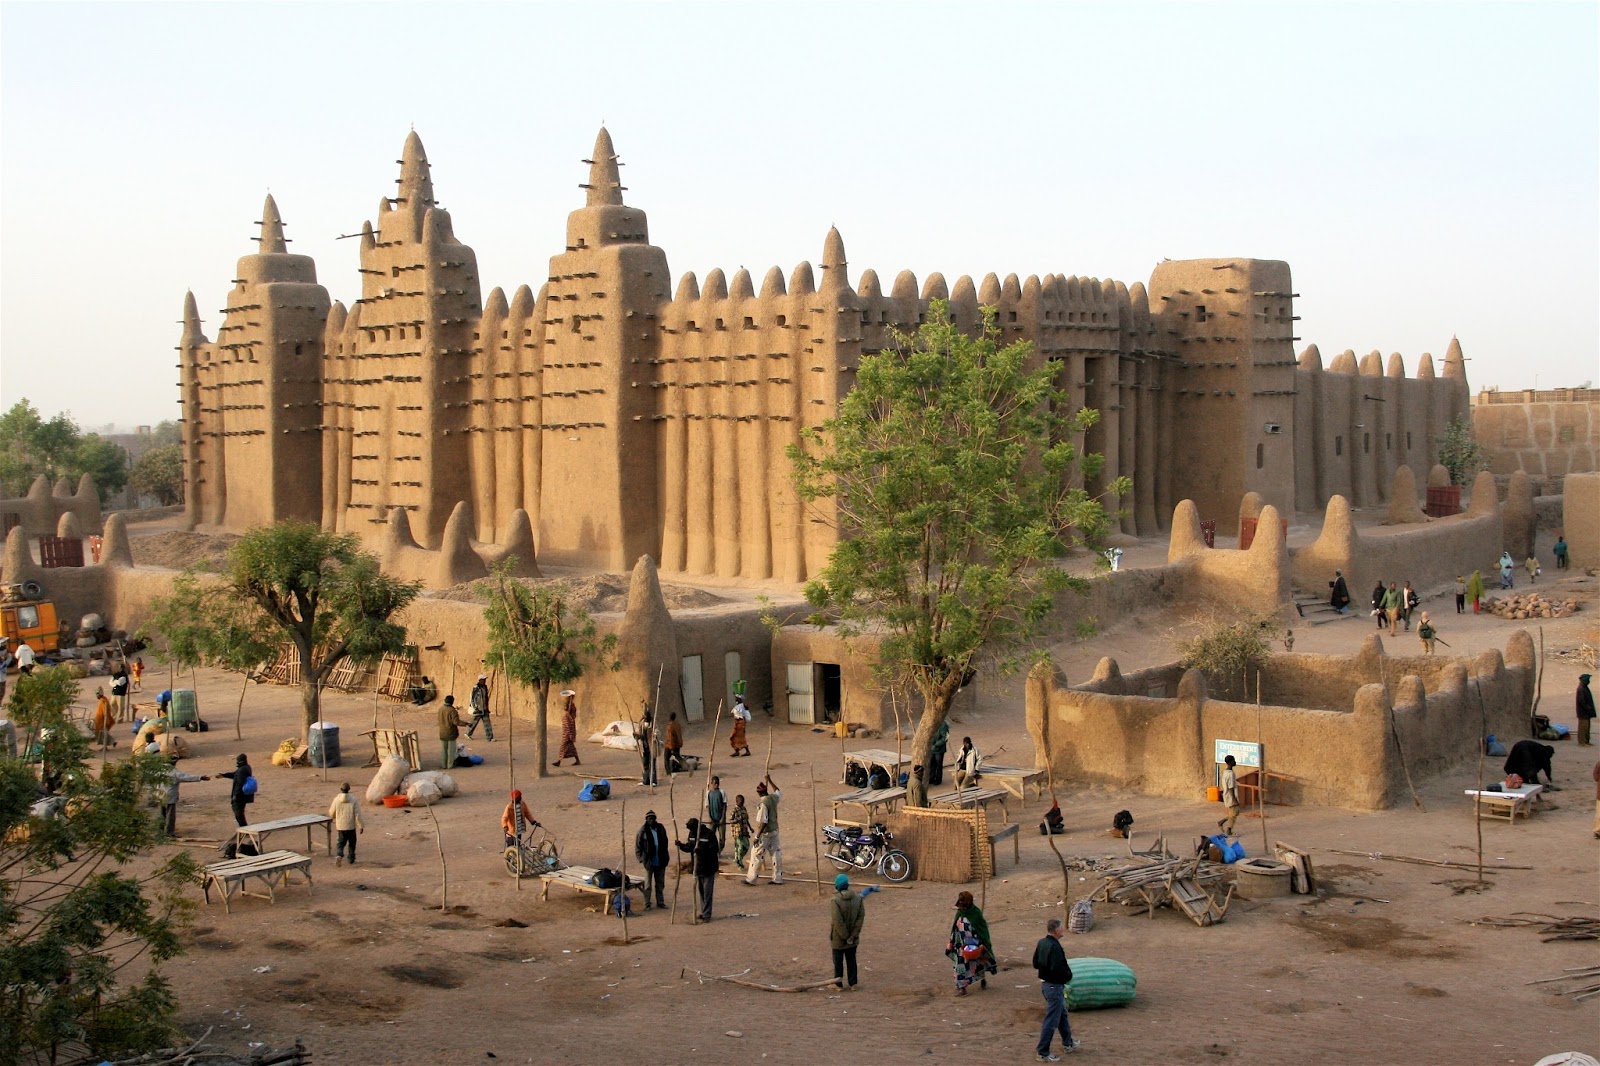 Le grand mosquee Djenne Mali